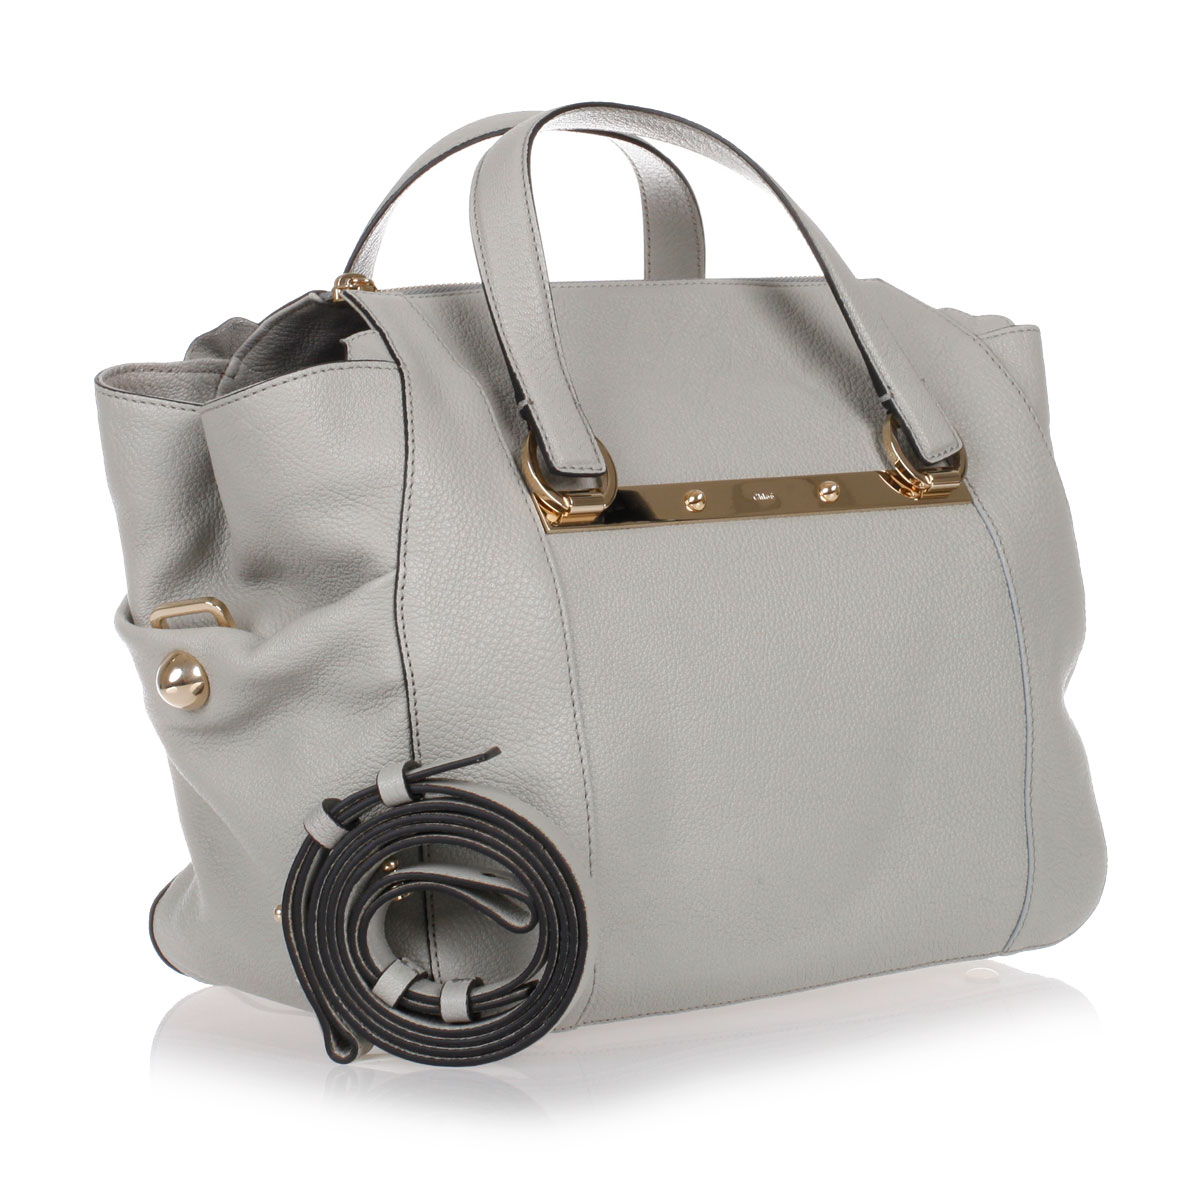 chloe bags replica - Chloe Women MARSHMALLOW GREY Leather Handbag - Spence Outlet